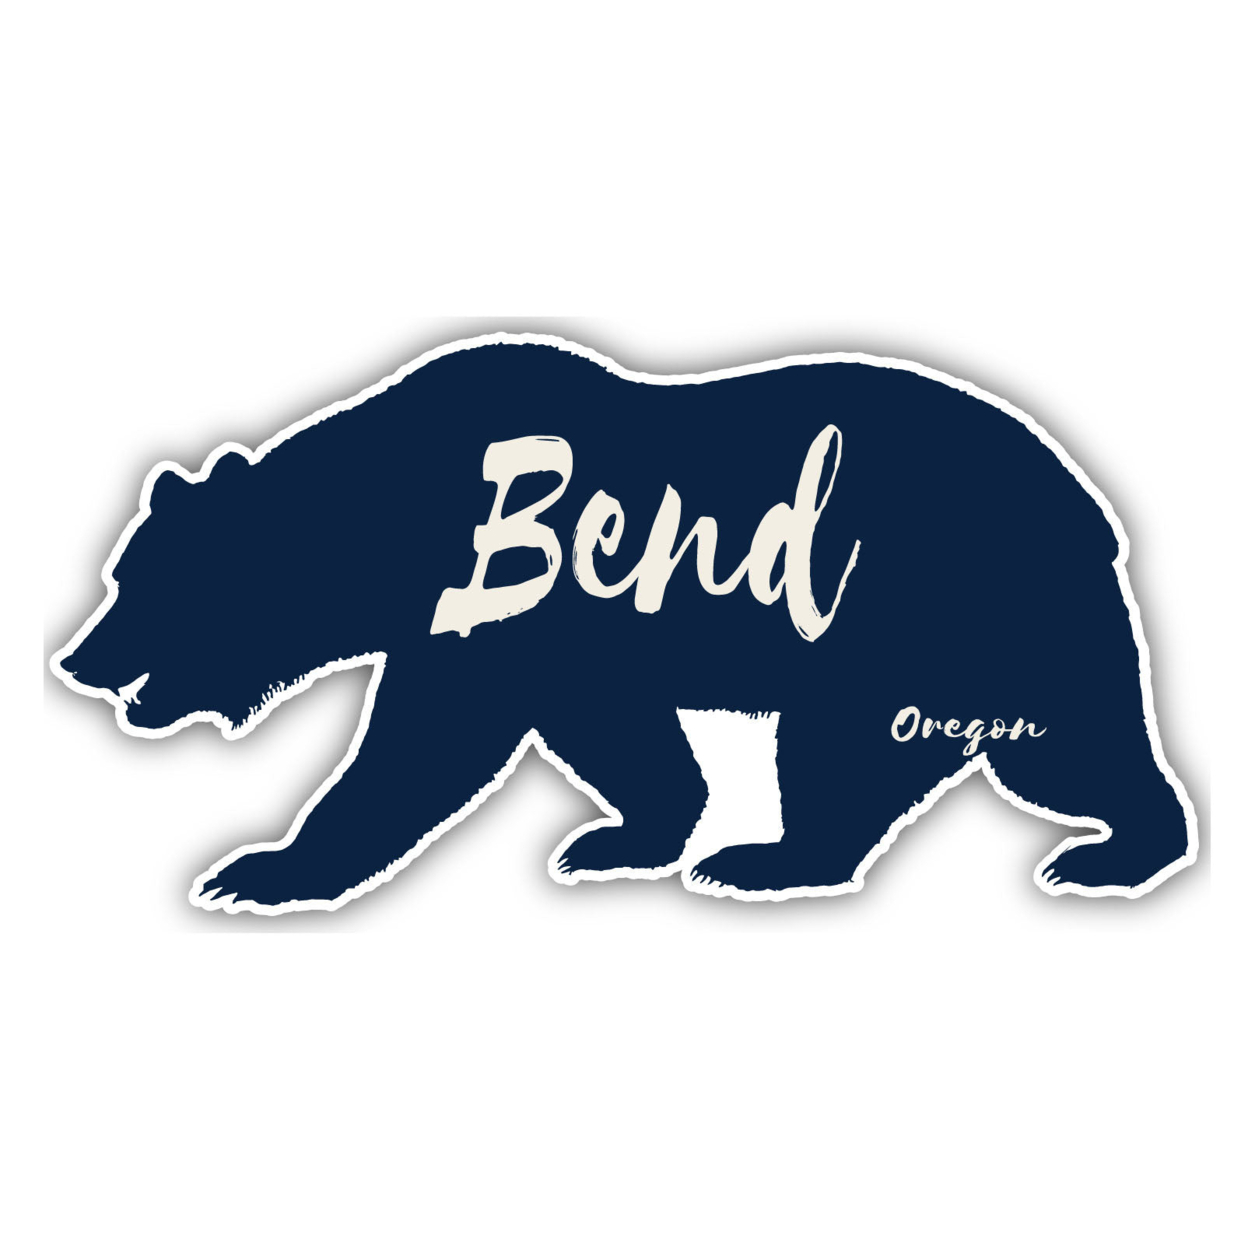 Bend Oregon Souvenir Decorative Stickers (Choose Theme And Size) - 4-Pack, 12-Inch, Tent